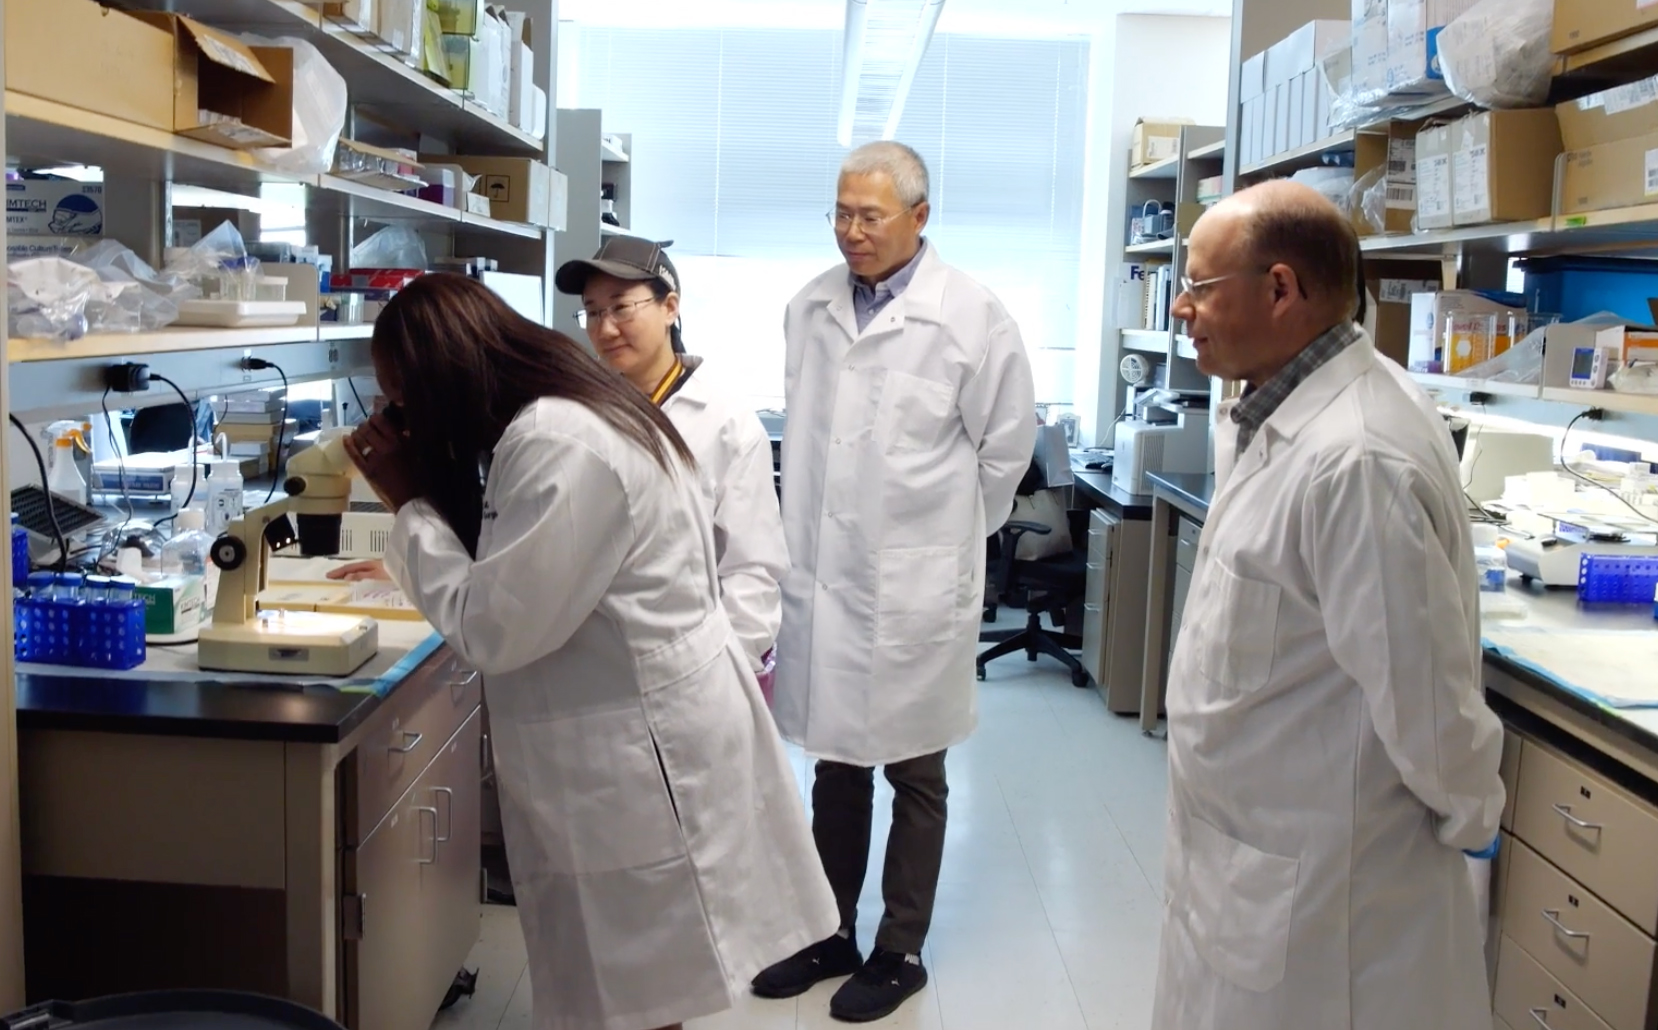 Kia Washington, MD, FACS, and her research team in the Washington Eye Lab